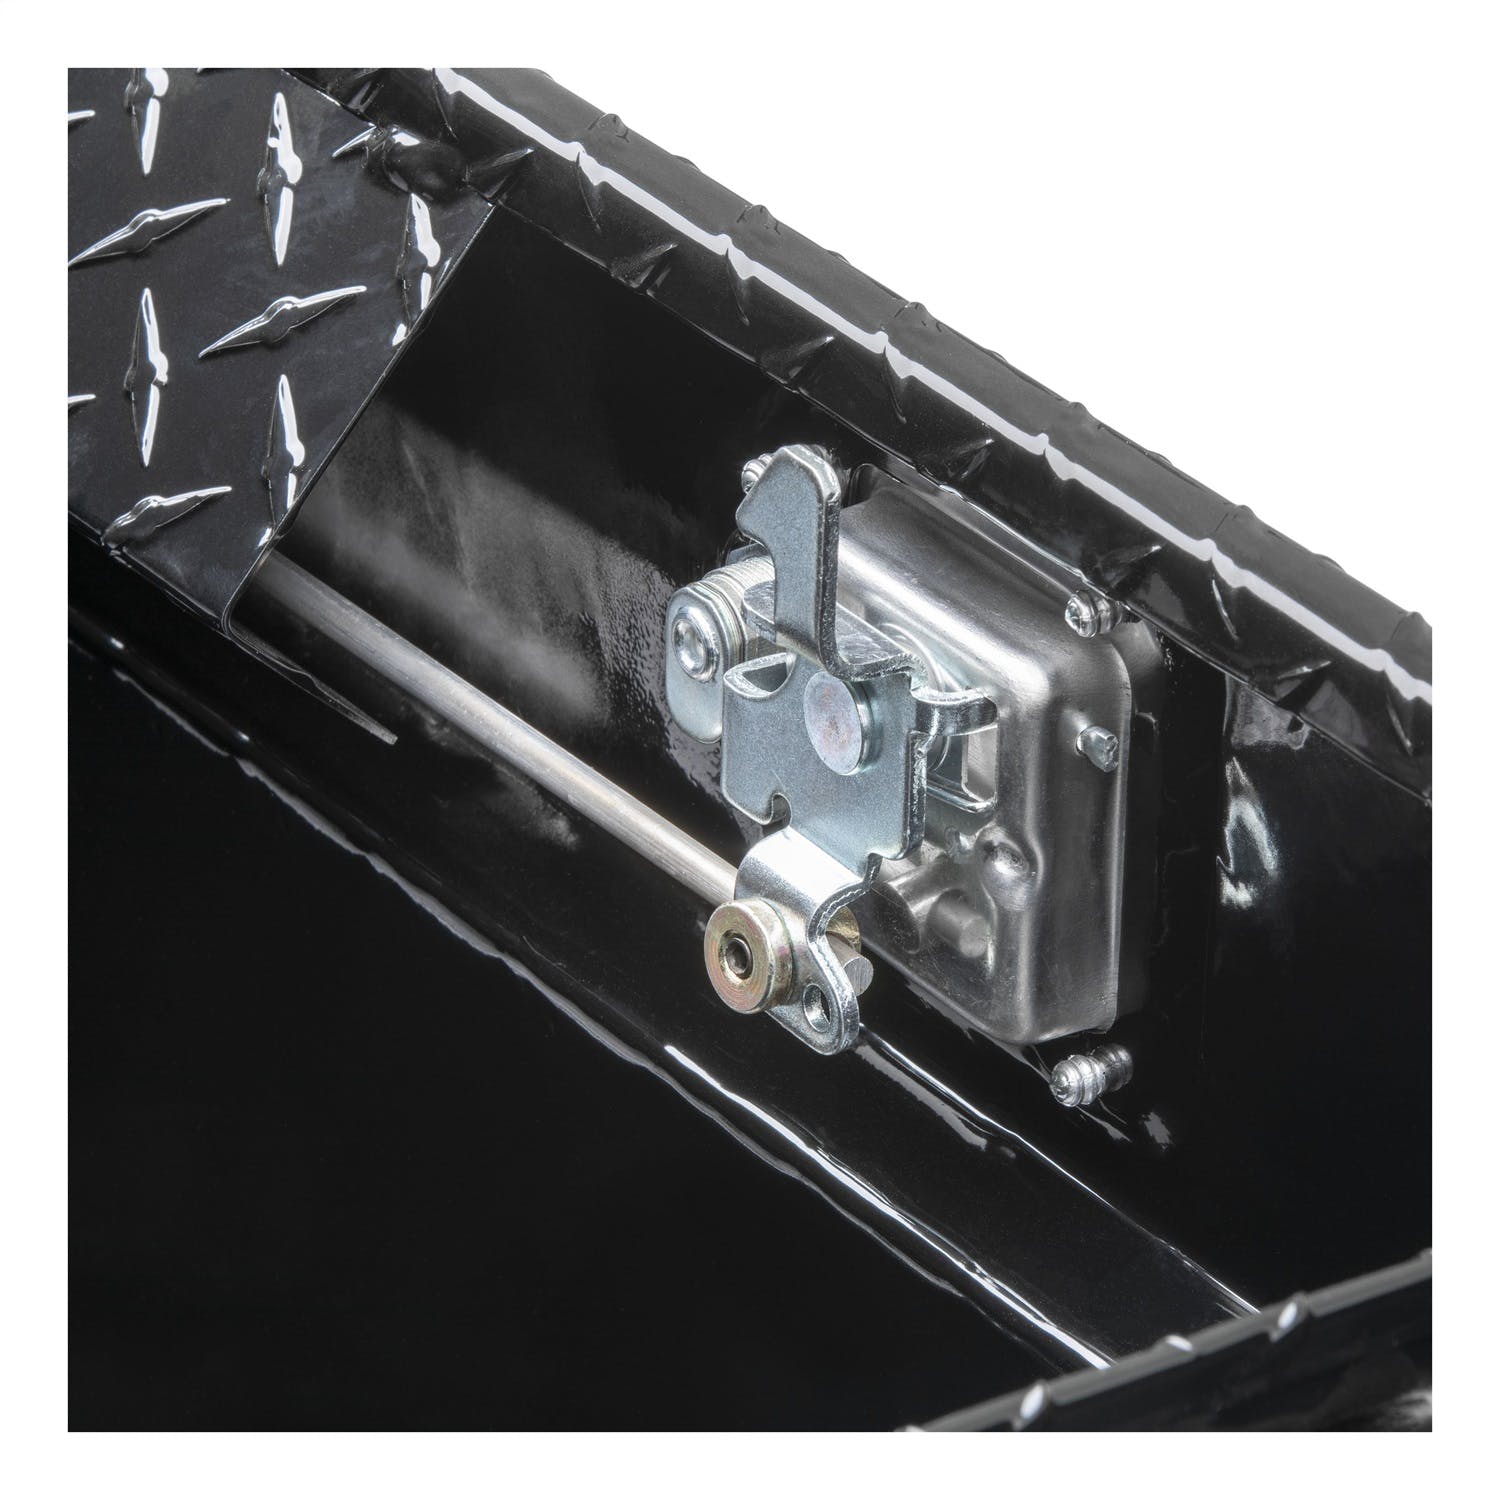 UWS TBSD-69-BLK 69 inch Aluminum Single Lid Crossover Toolbox Deep Black